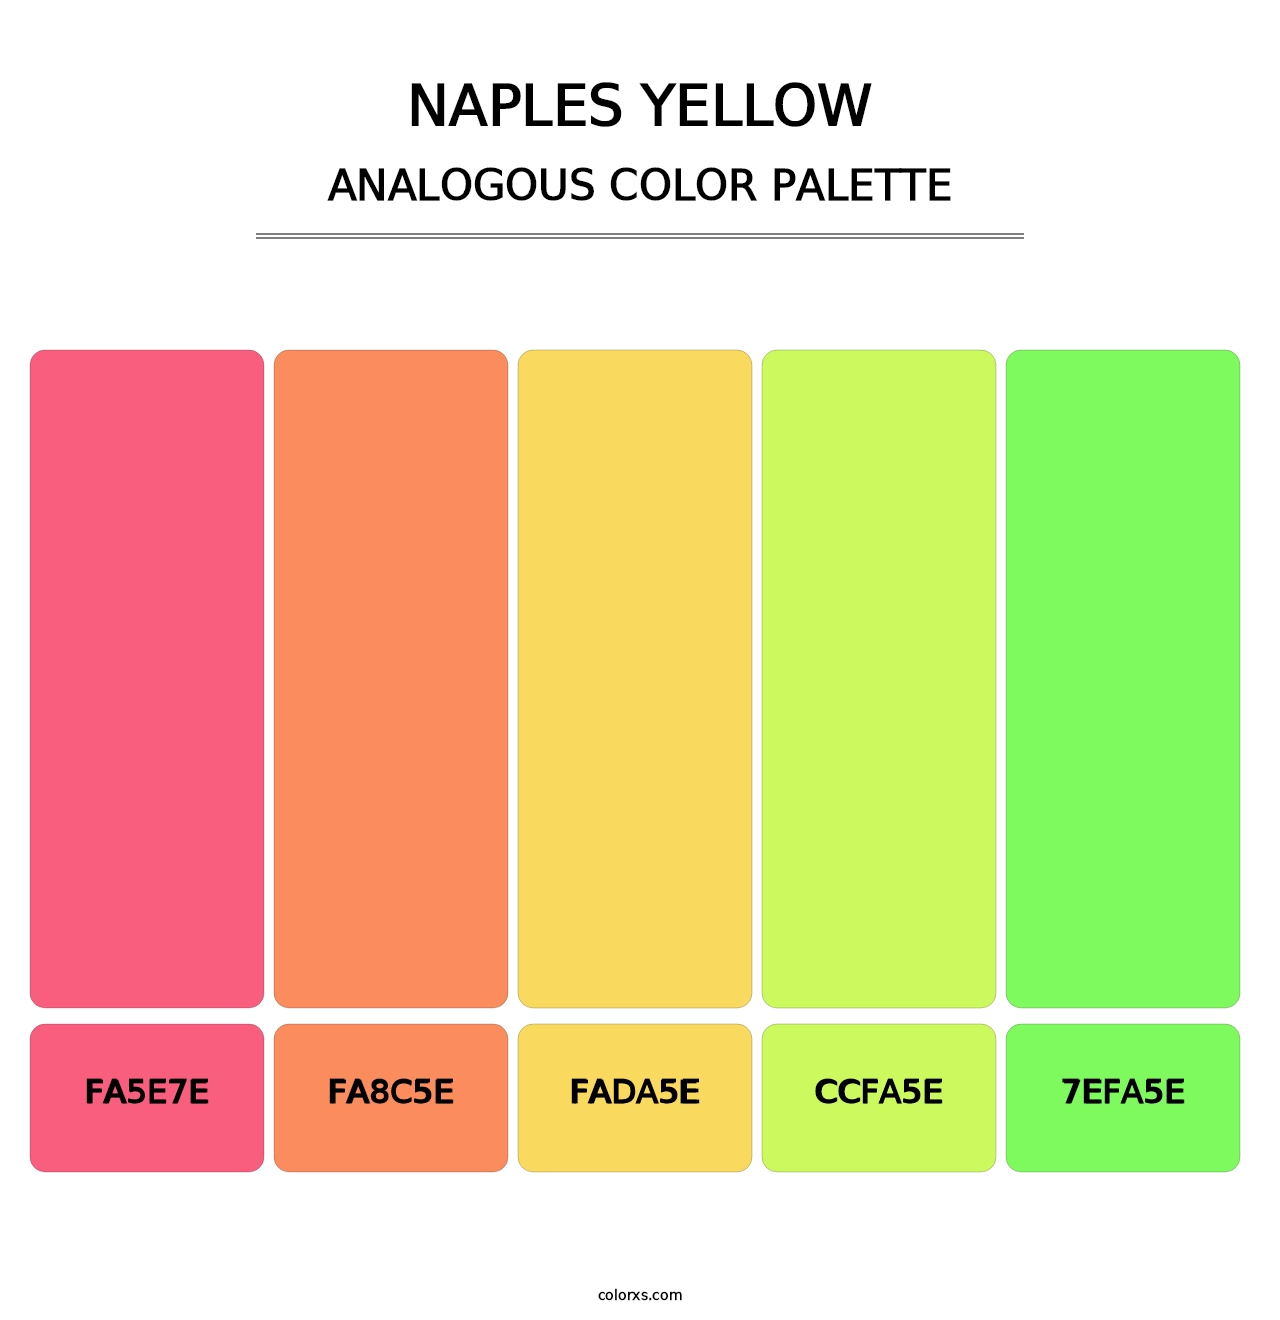 Naples Yellow - Analogous Color Palette